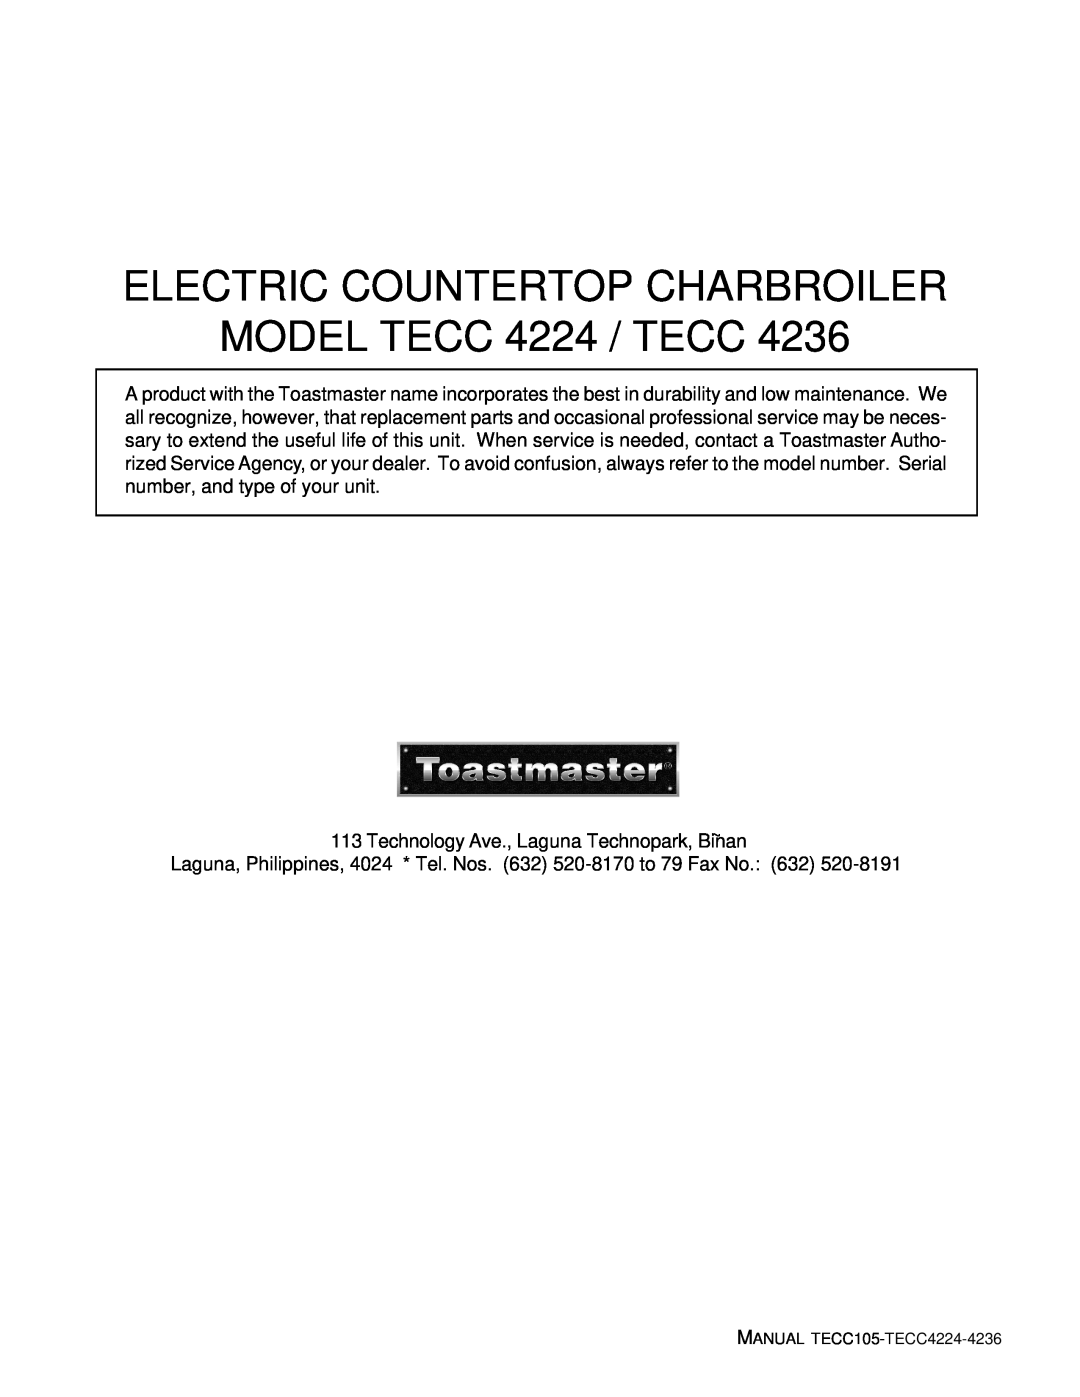 Toastmaster TECC 4236 manual ELECTRIC COUNTERTOP CHARBROILER MODEL TECC 4224 / TECC 